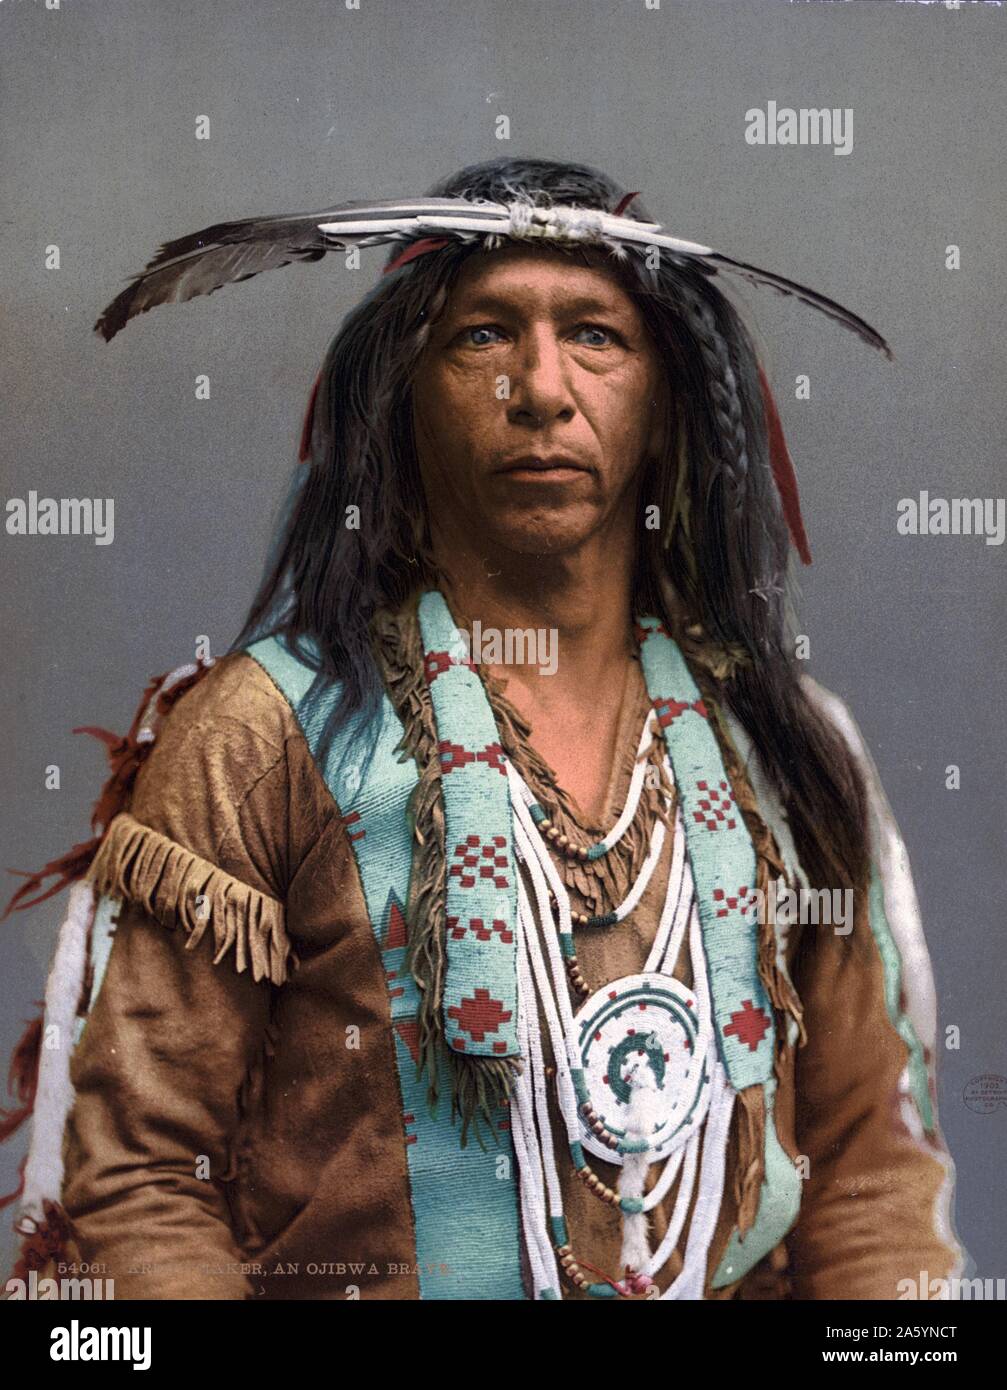 Pfeil, ein ojibwa Indianer c 1903 mutig. Stockfoto